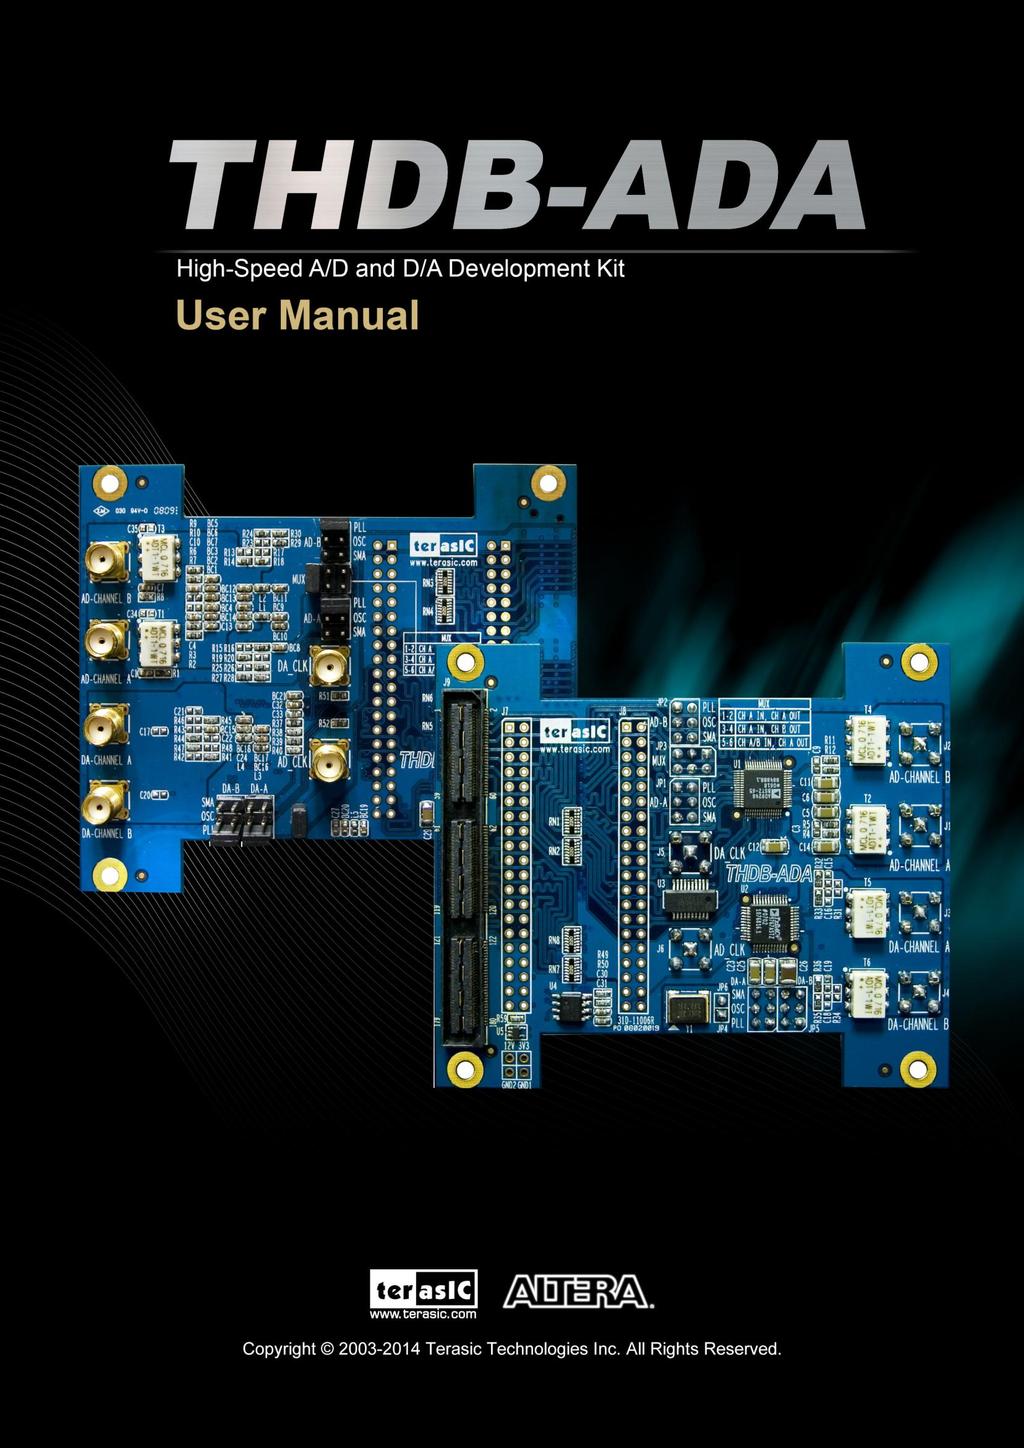 THD-D User Manual